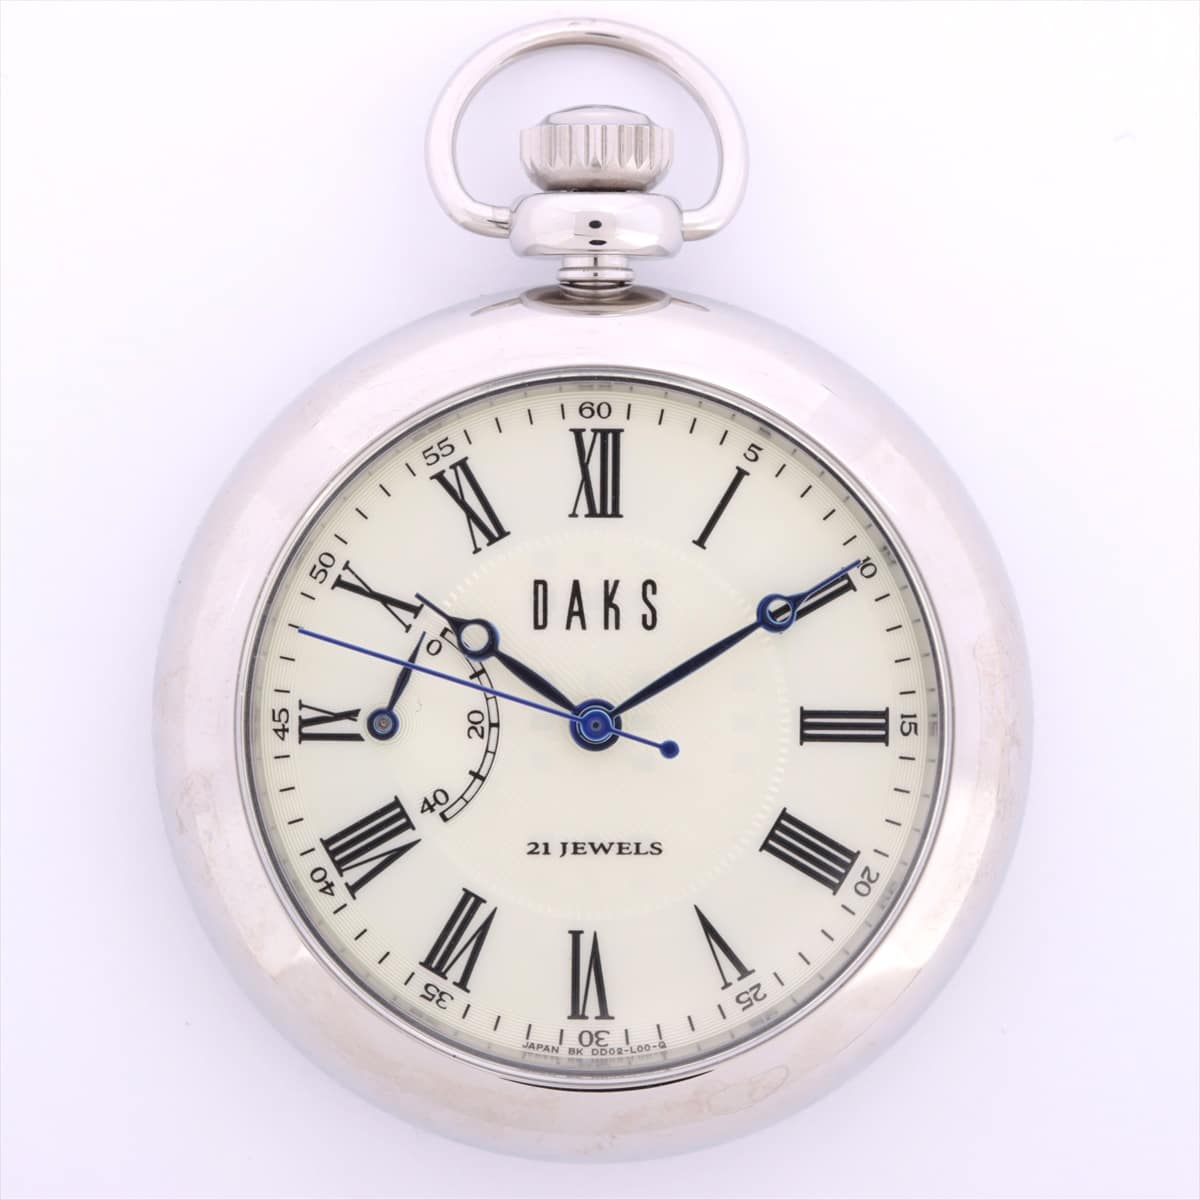 DAKS 120th anniversary limited edition Pocket Watch WR0011DD SS Stem-winder White-Face